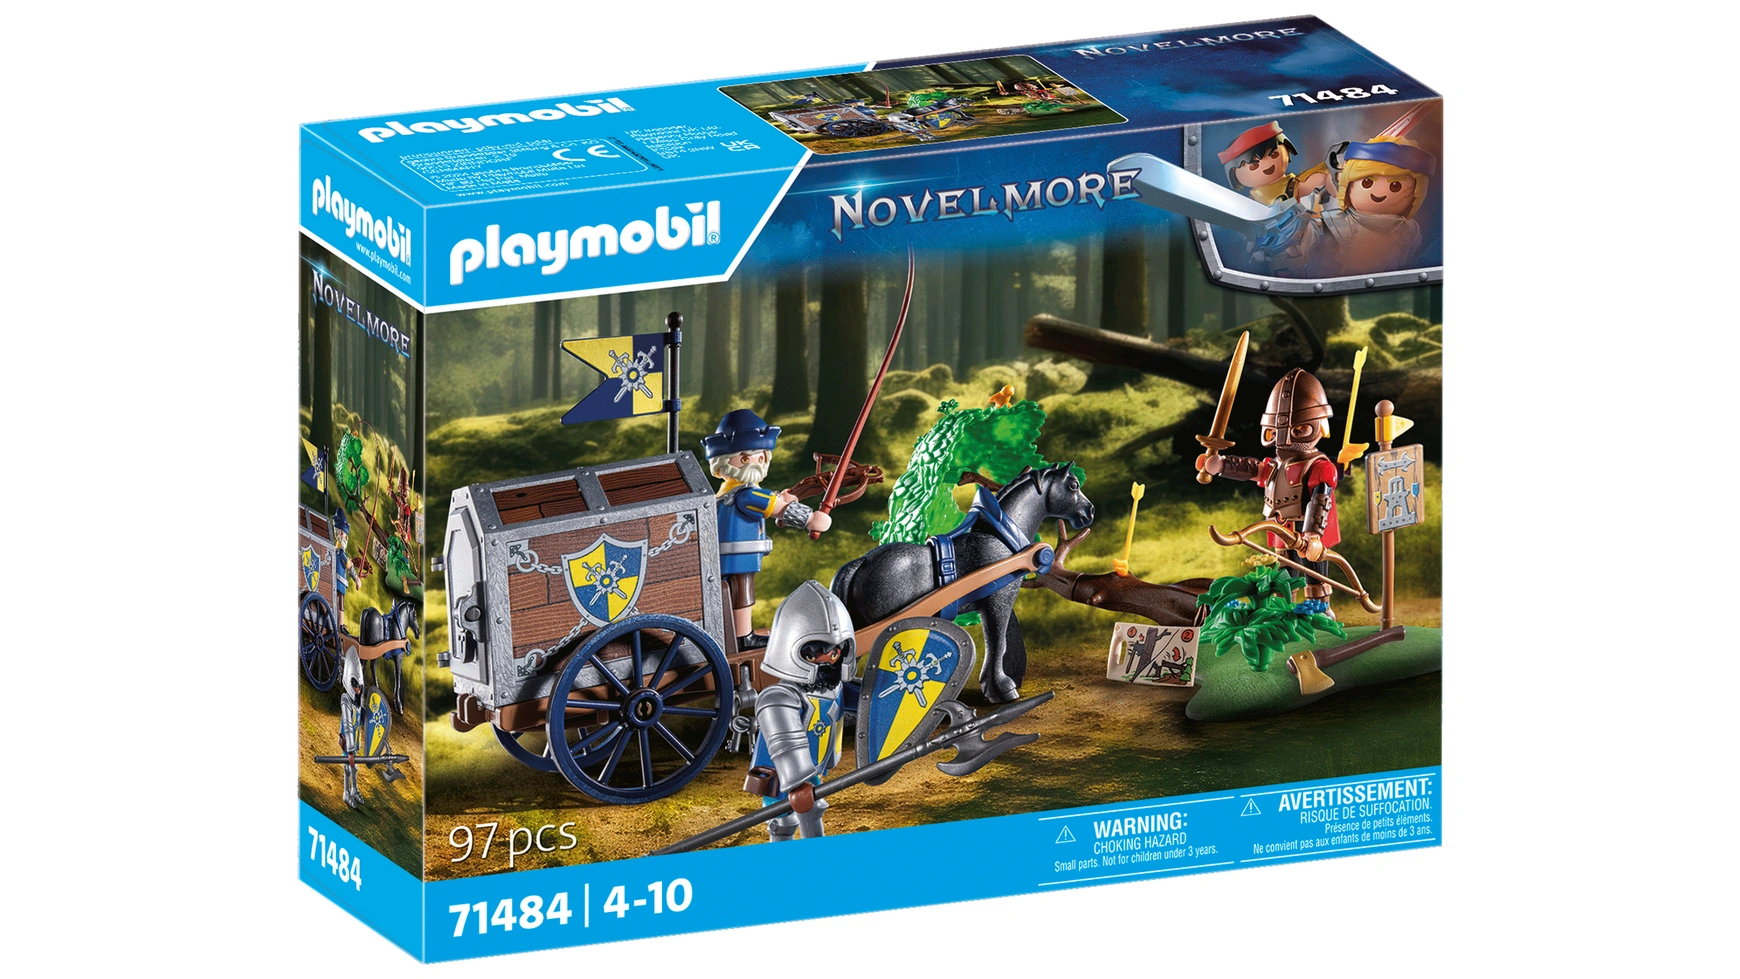 Novelmore рейд грузового транспорта Playmobil novelmore мои фигурки рыцари новелмора playmobil